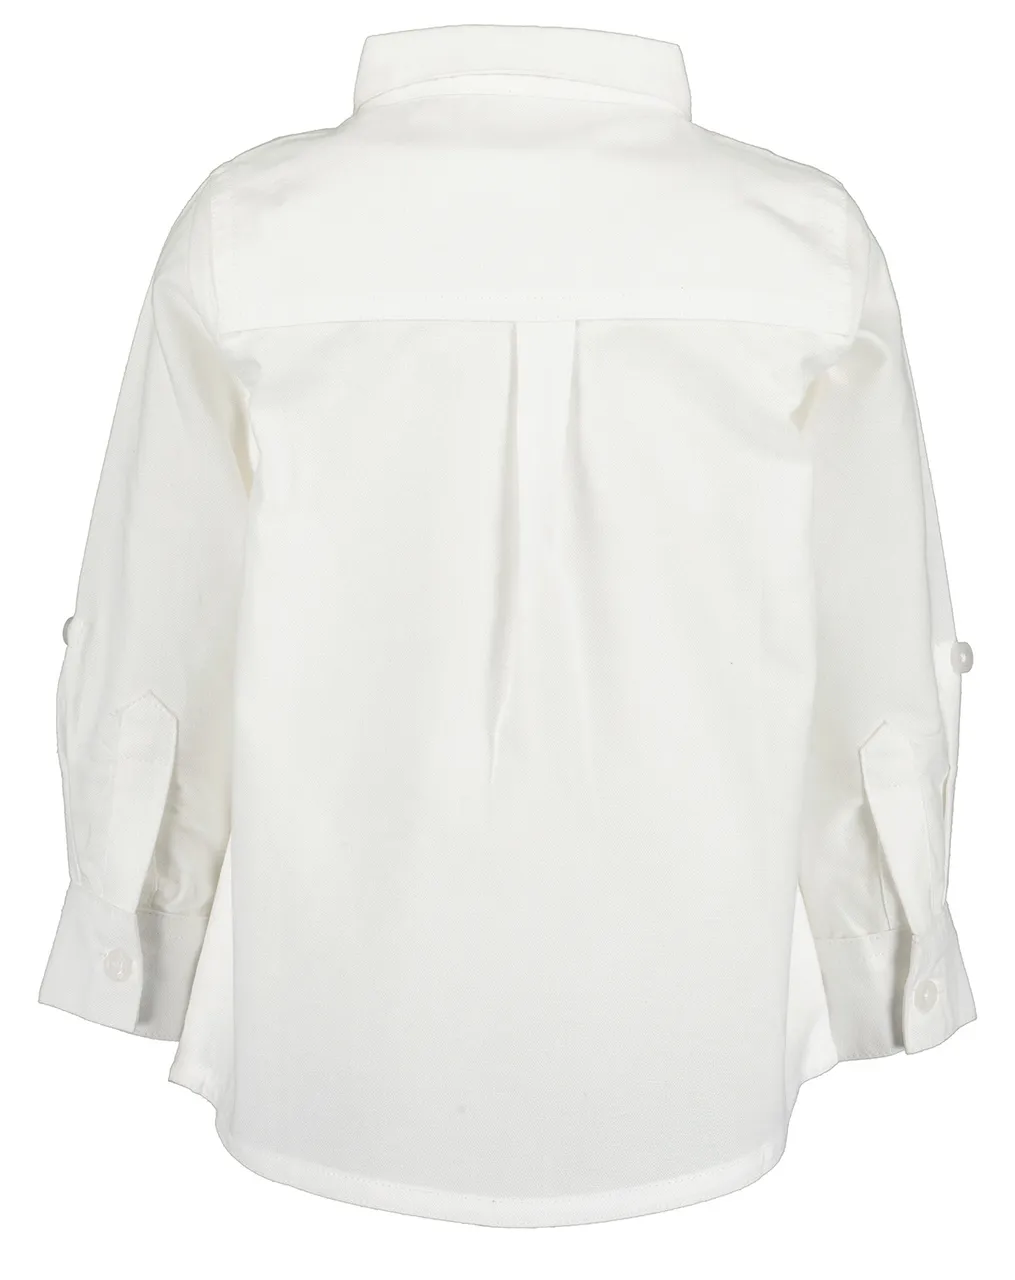 Langarm-Hemd ROLL UP in weiß